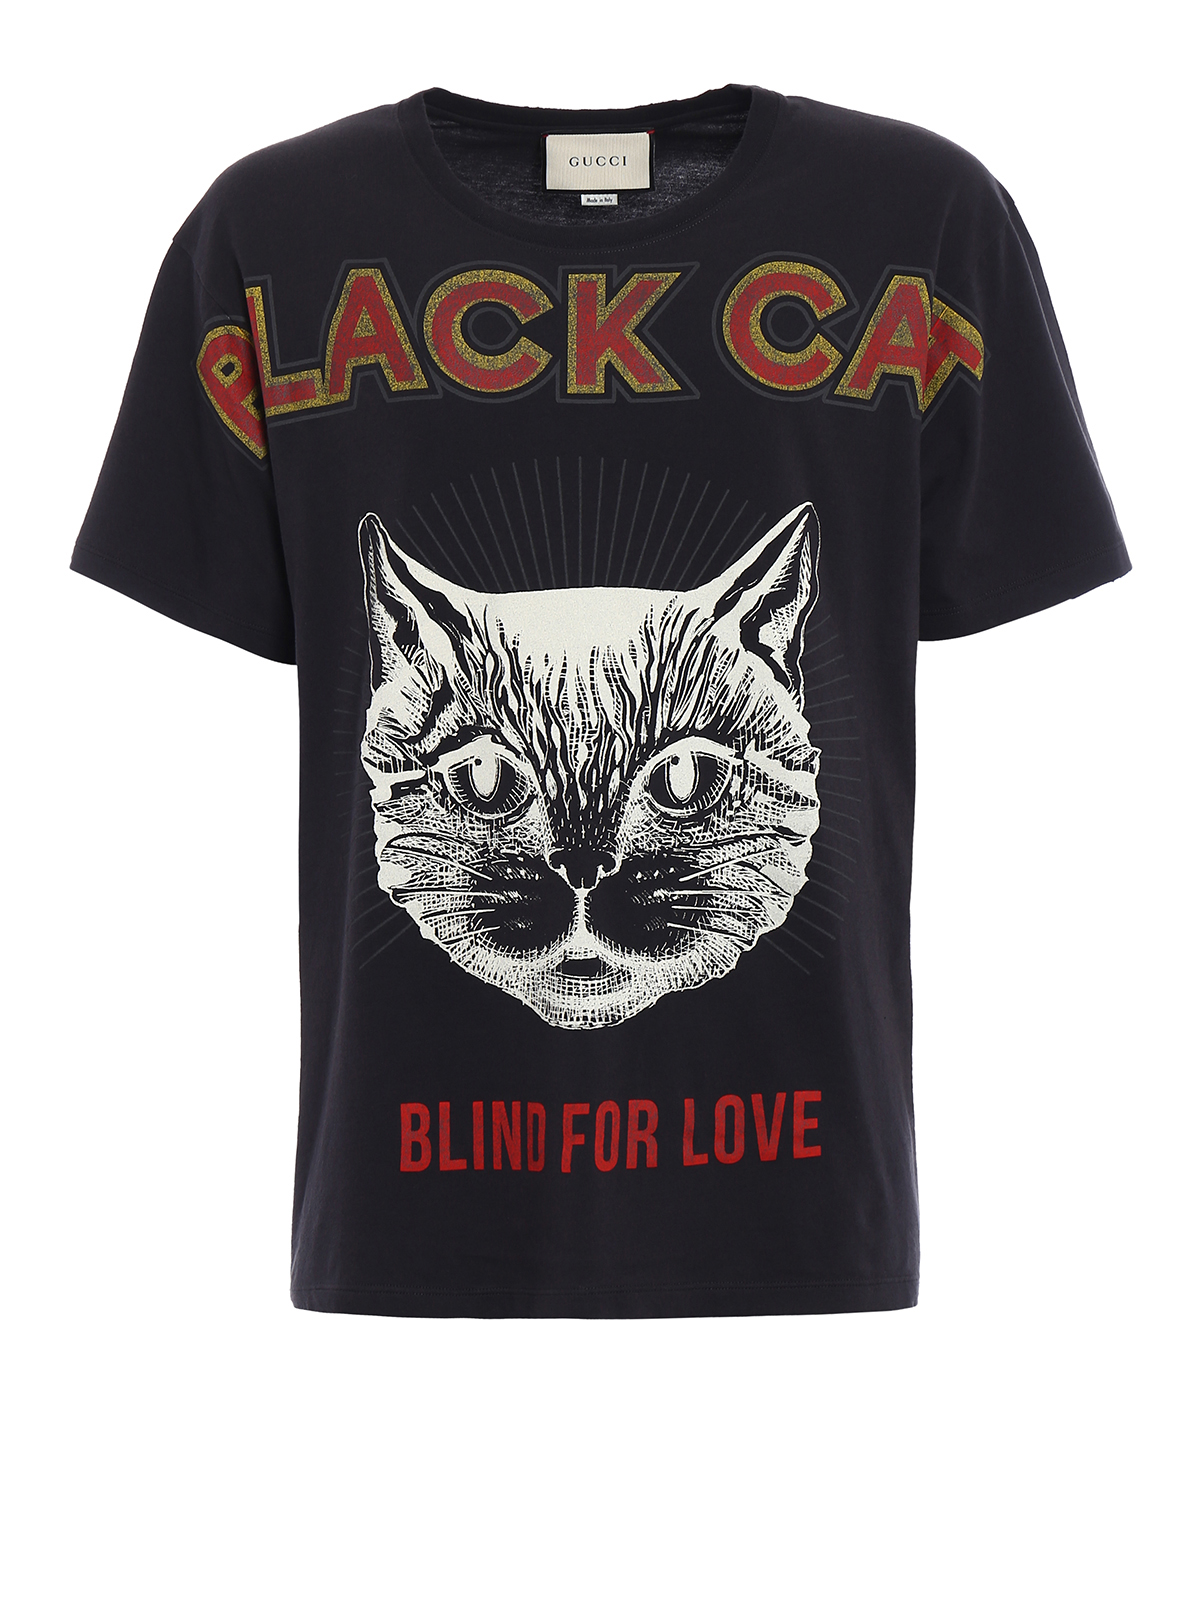 gucci black cat t shirt price